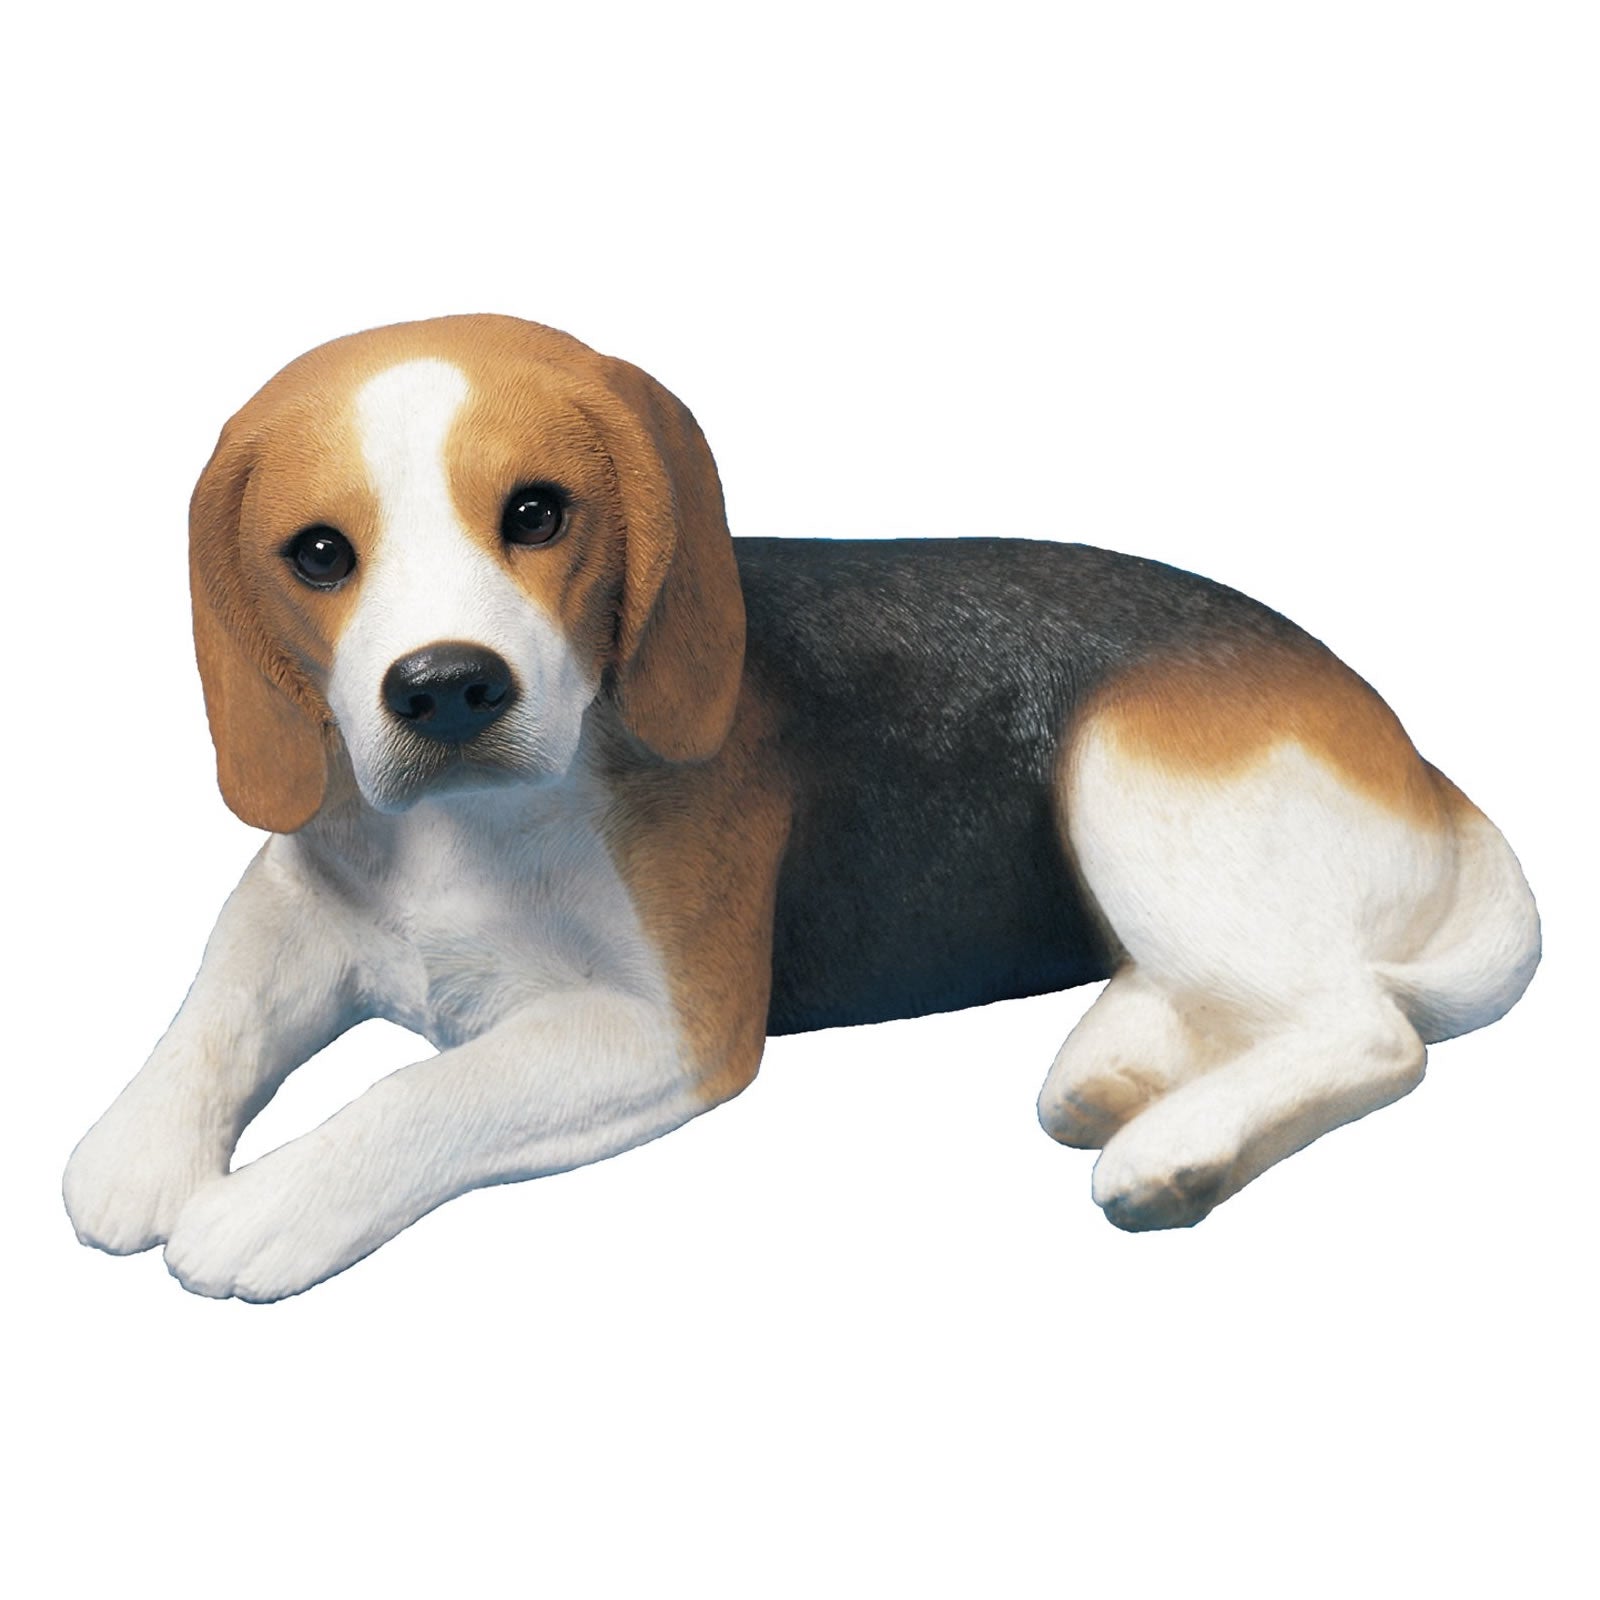 Beagle Dog Statue, Lying